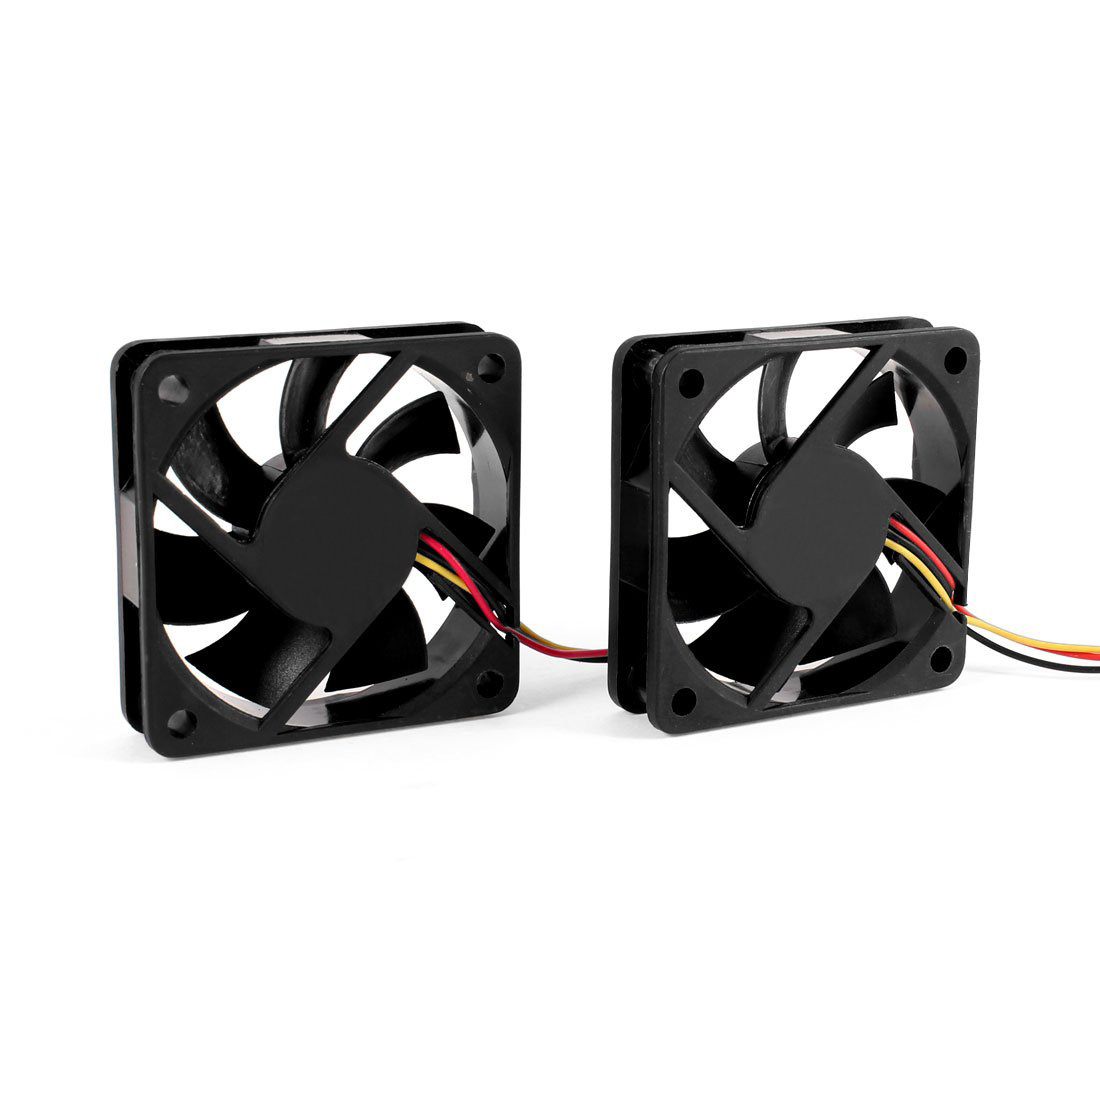 PCCOOLER CPU Cooler 3pin Mini CPU Cooler Heatsink Fan Cooling with 80mm Cooling Fan for Desktop Computer